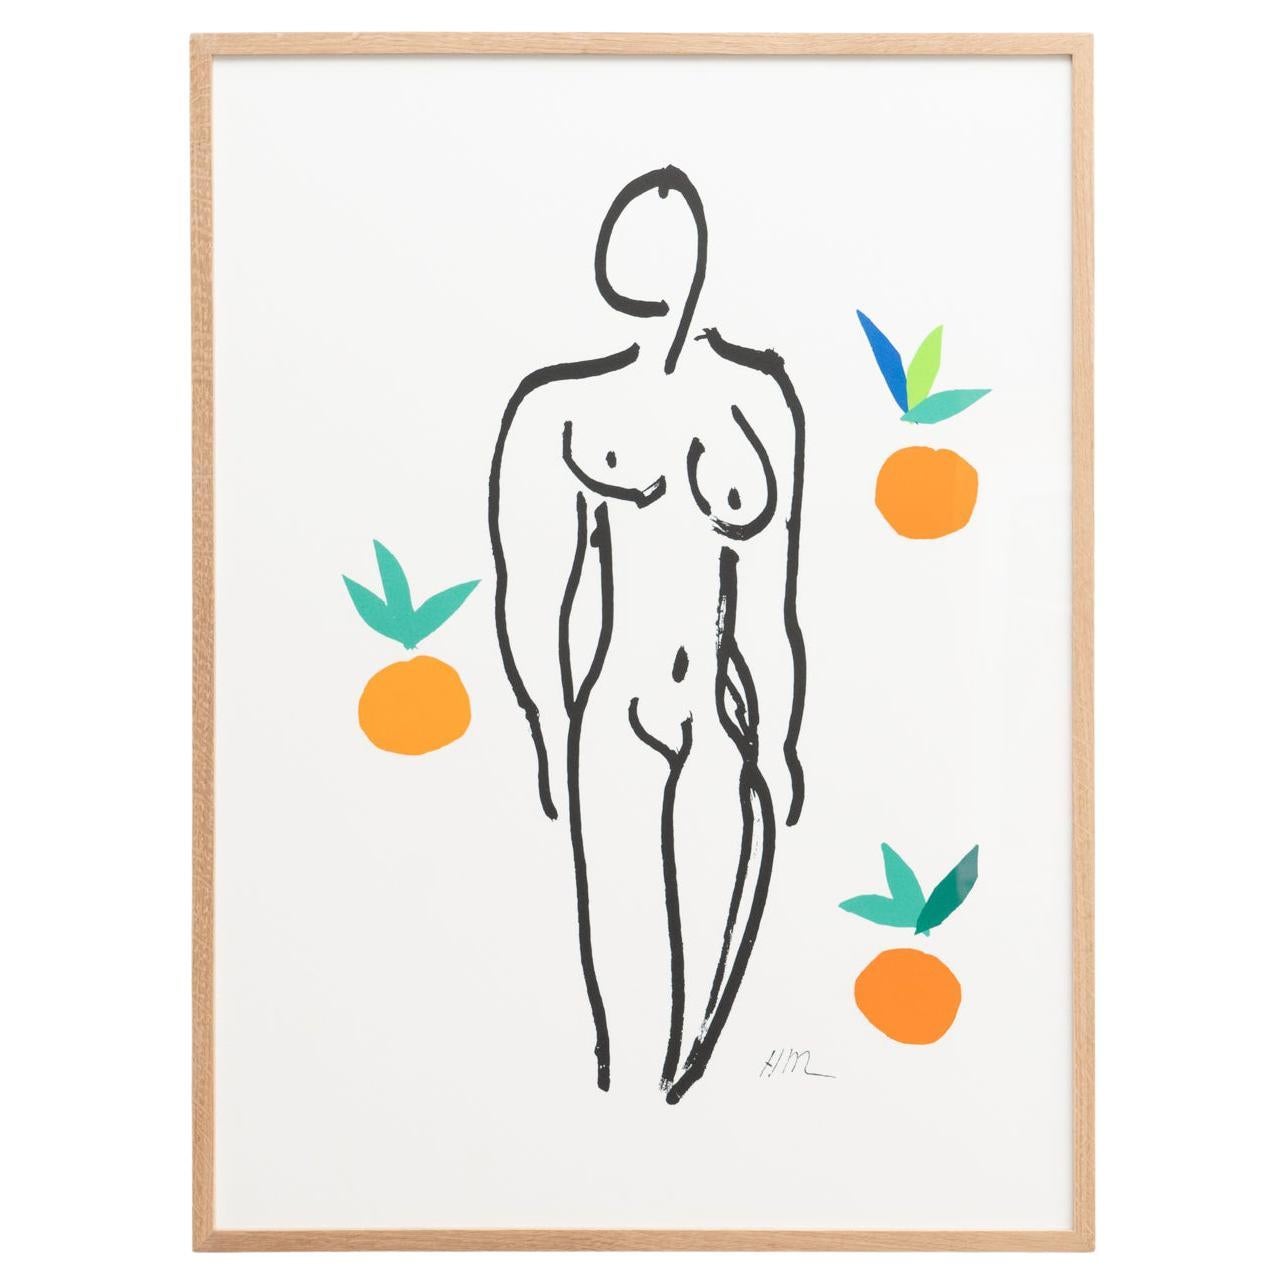 After Henri Matisse 'Nu Aux Orange' Lithograph, circa 2007